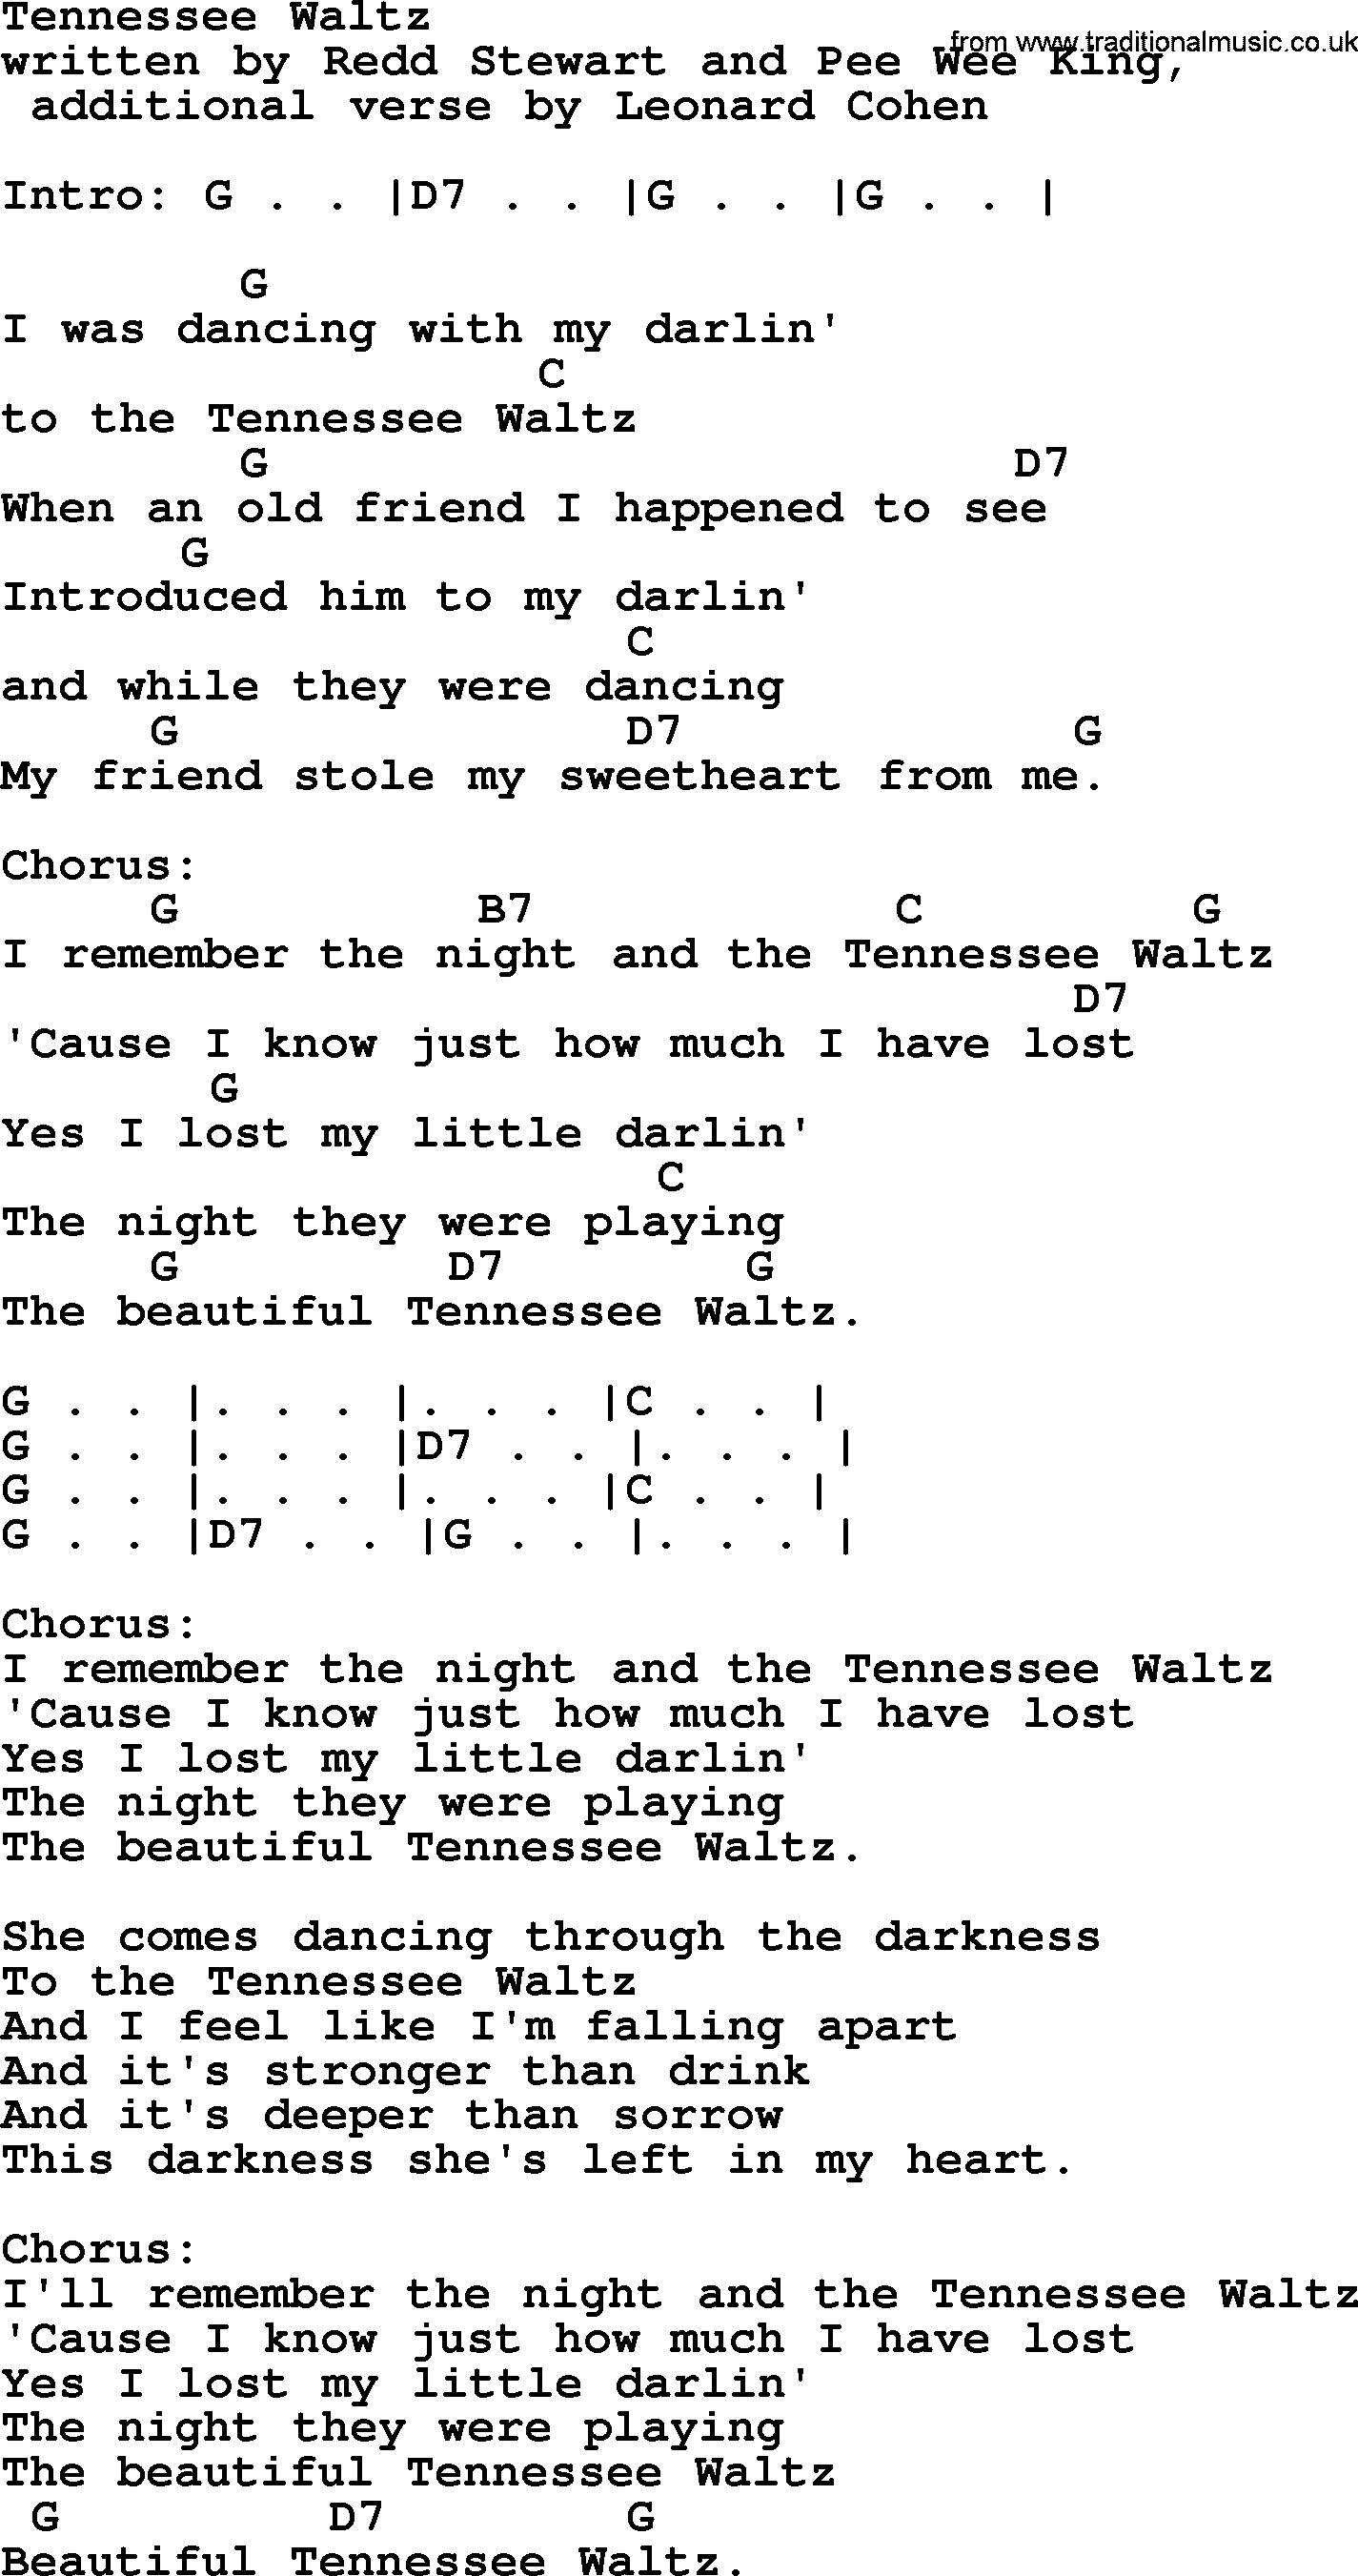 Leonard Cohen song Tennessee Waltz, lyrics and chords